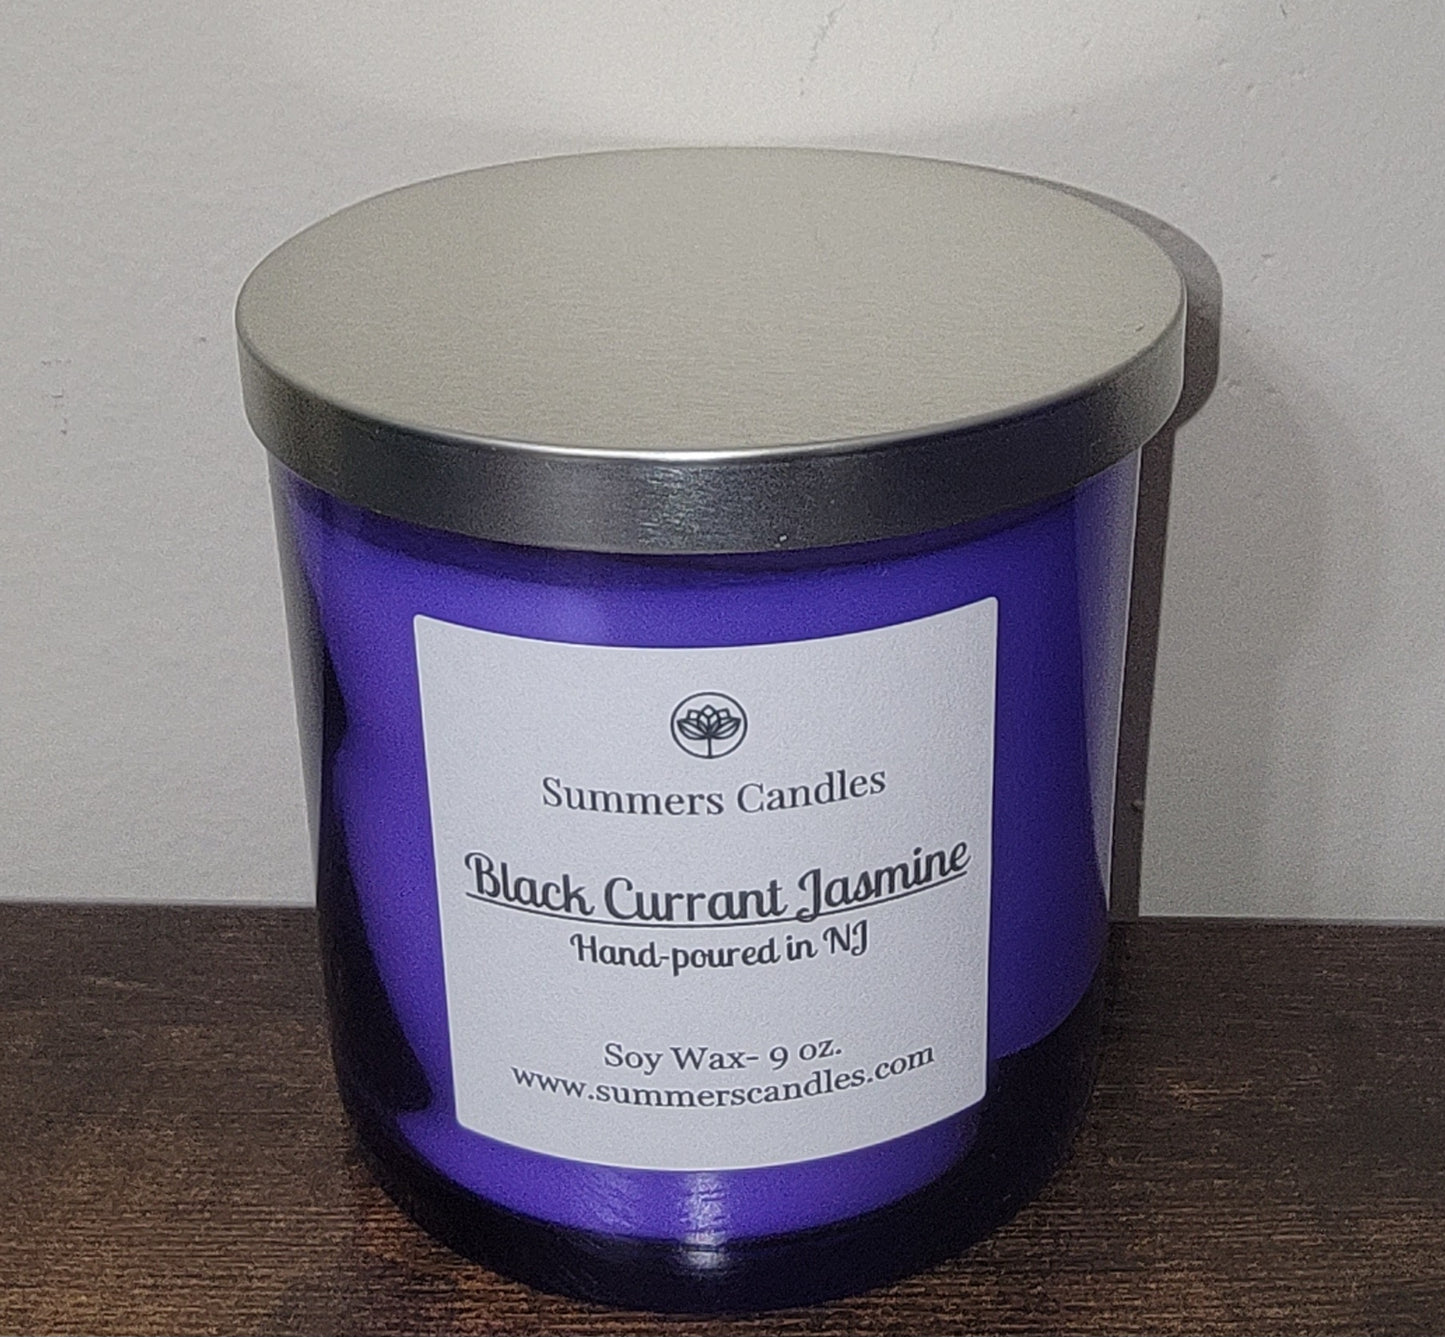 Black Currant Jasmine- Summers Candles 